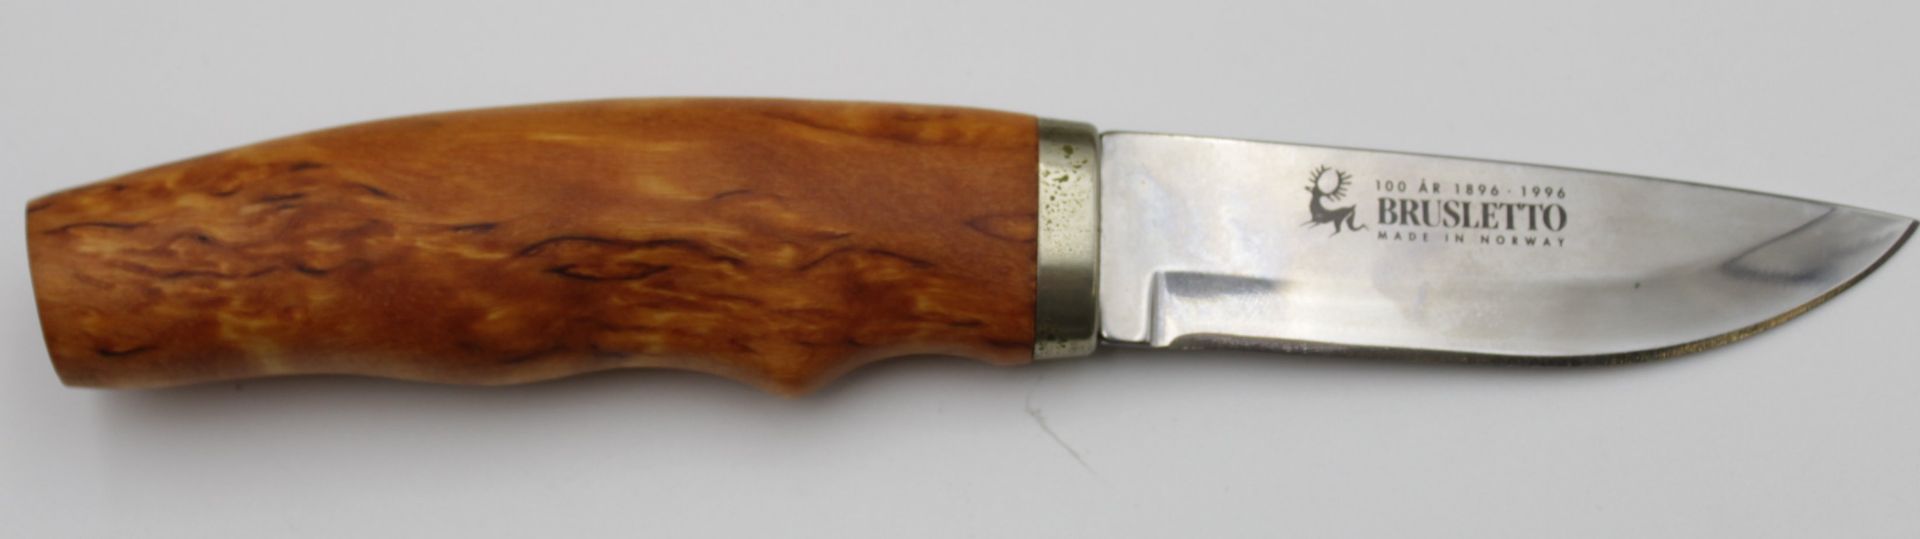 Jagdmesser in orig. Etui, Brusletto Norway, ca. L-20cm. - Bild 3 aus 5